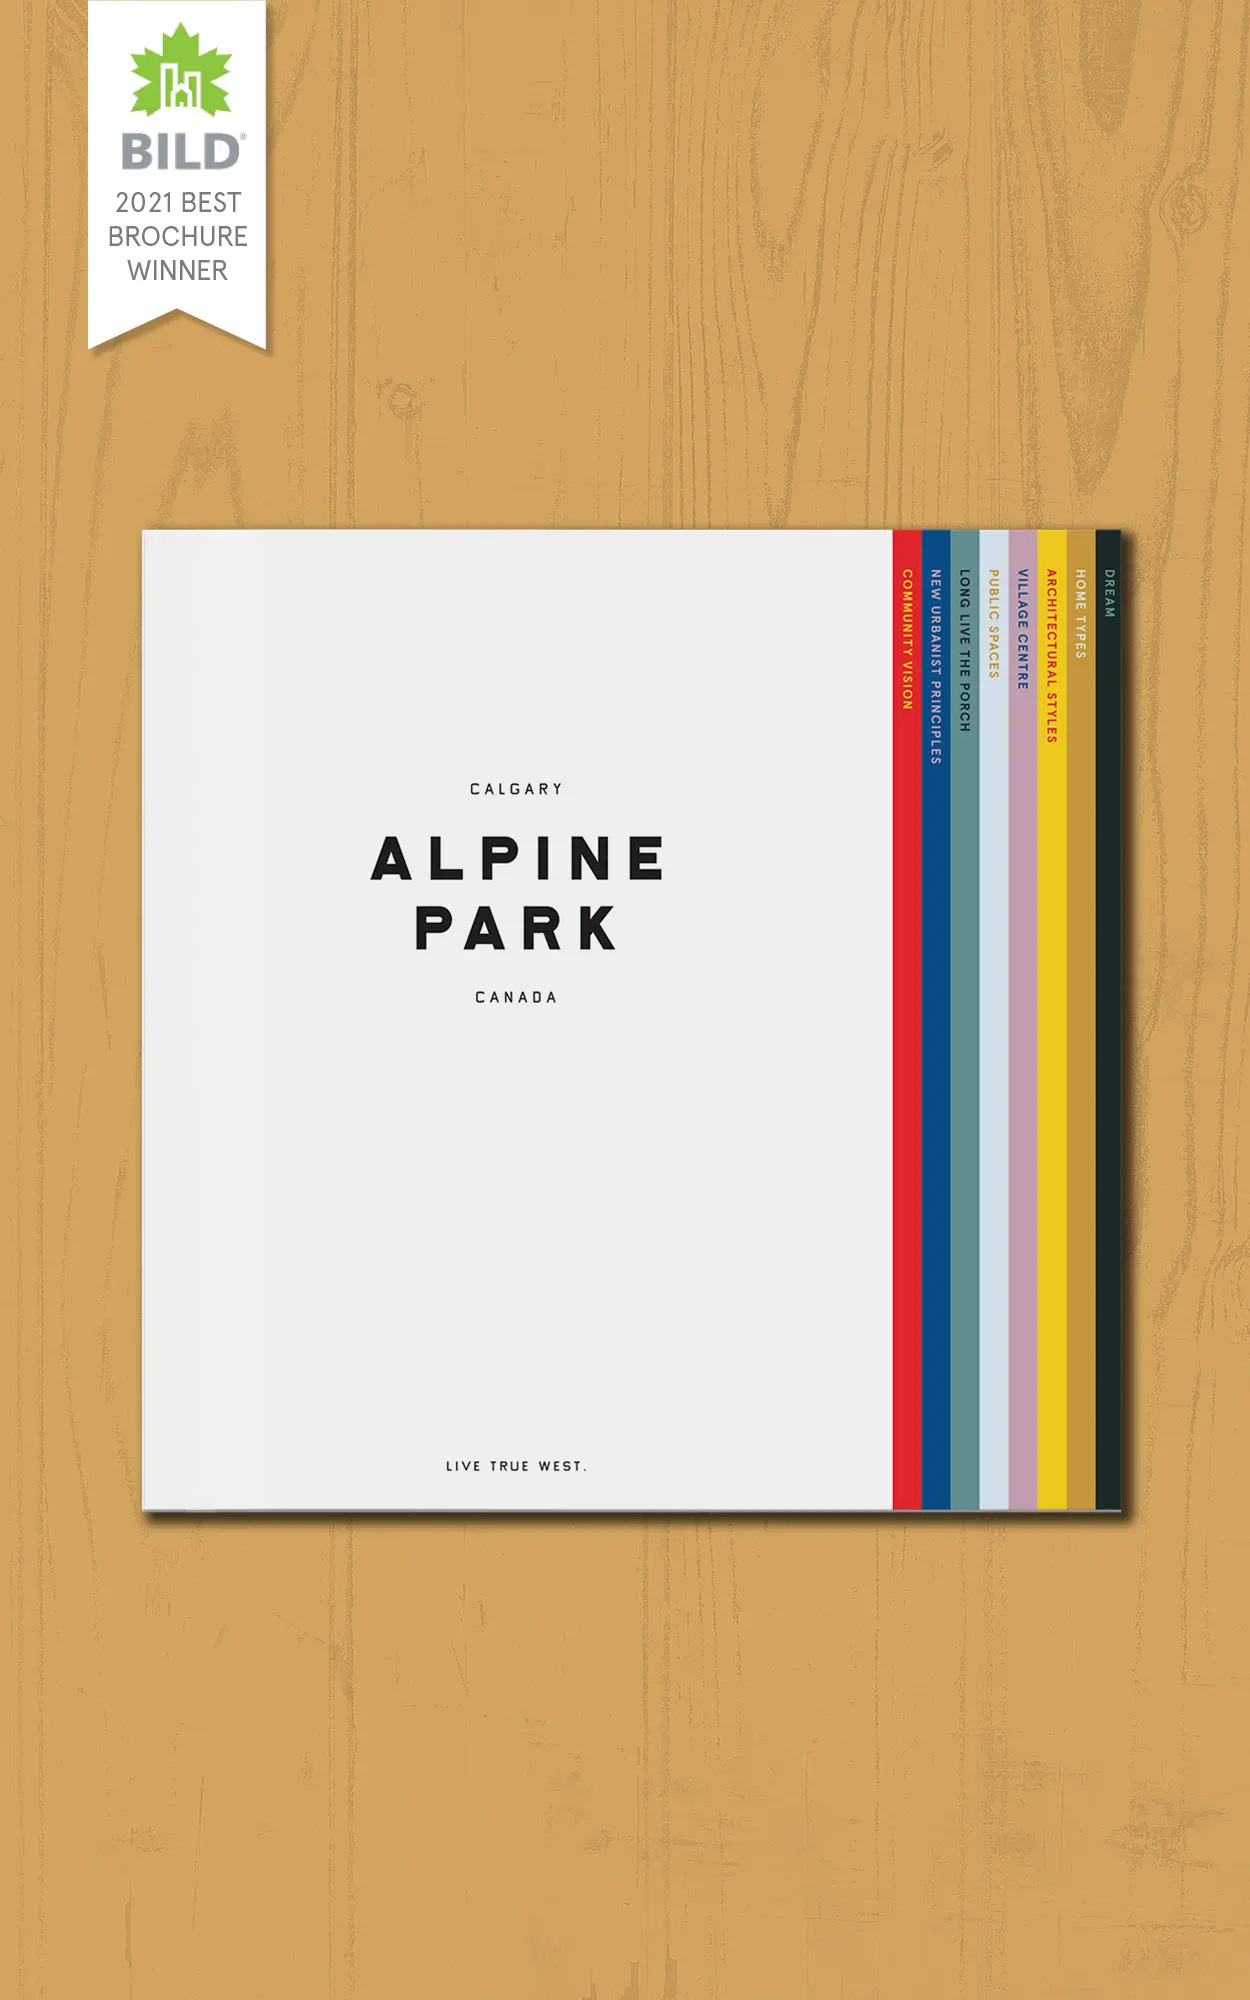 Alpine Park brochure cover with BILD Award badge for best brochure